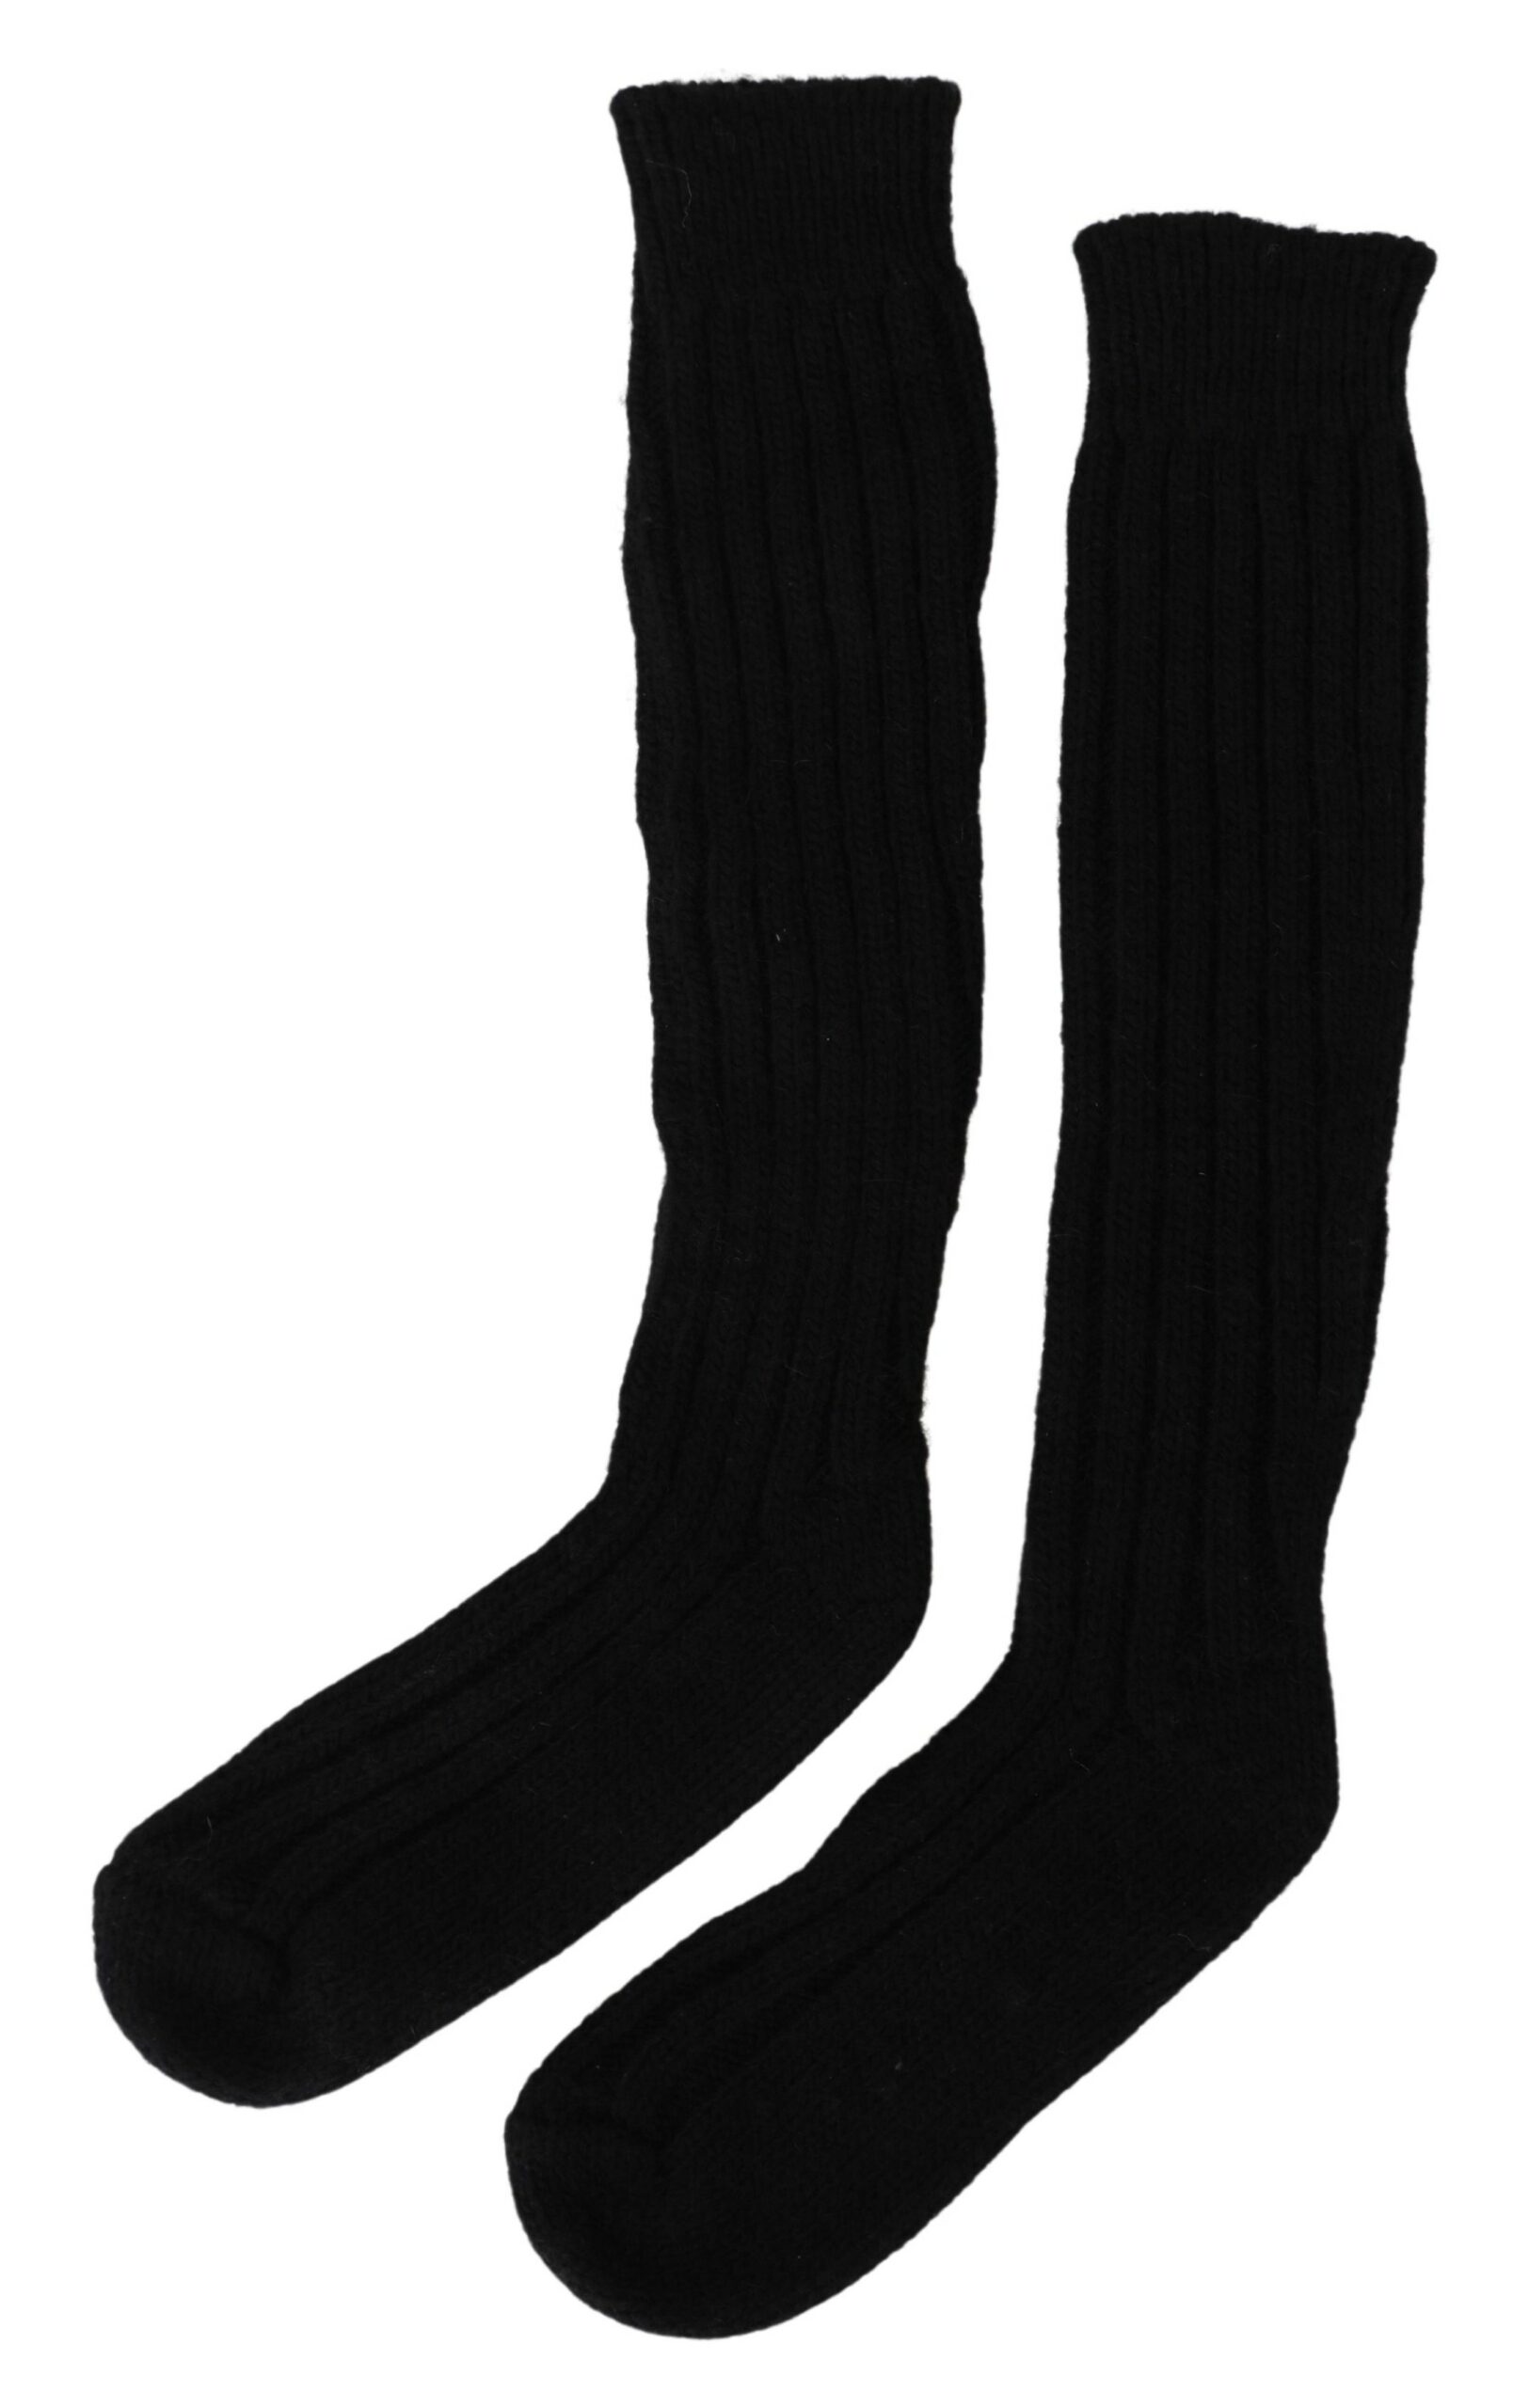 Black Wool Knit Calf Long Women Socks